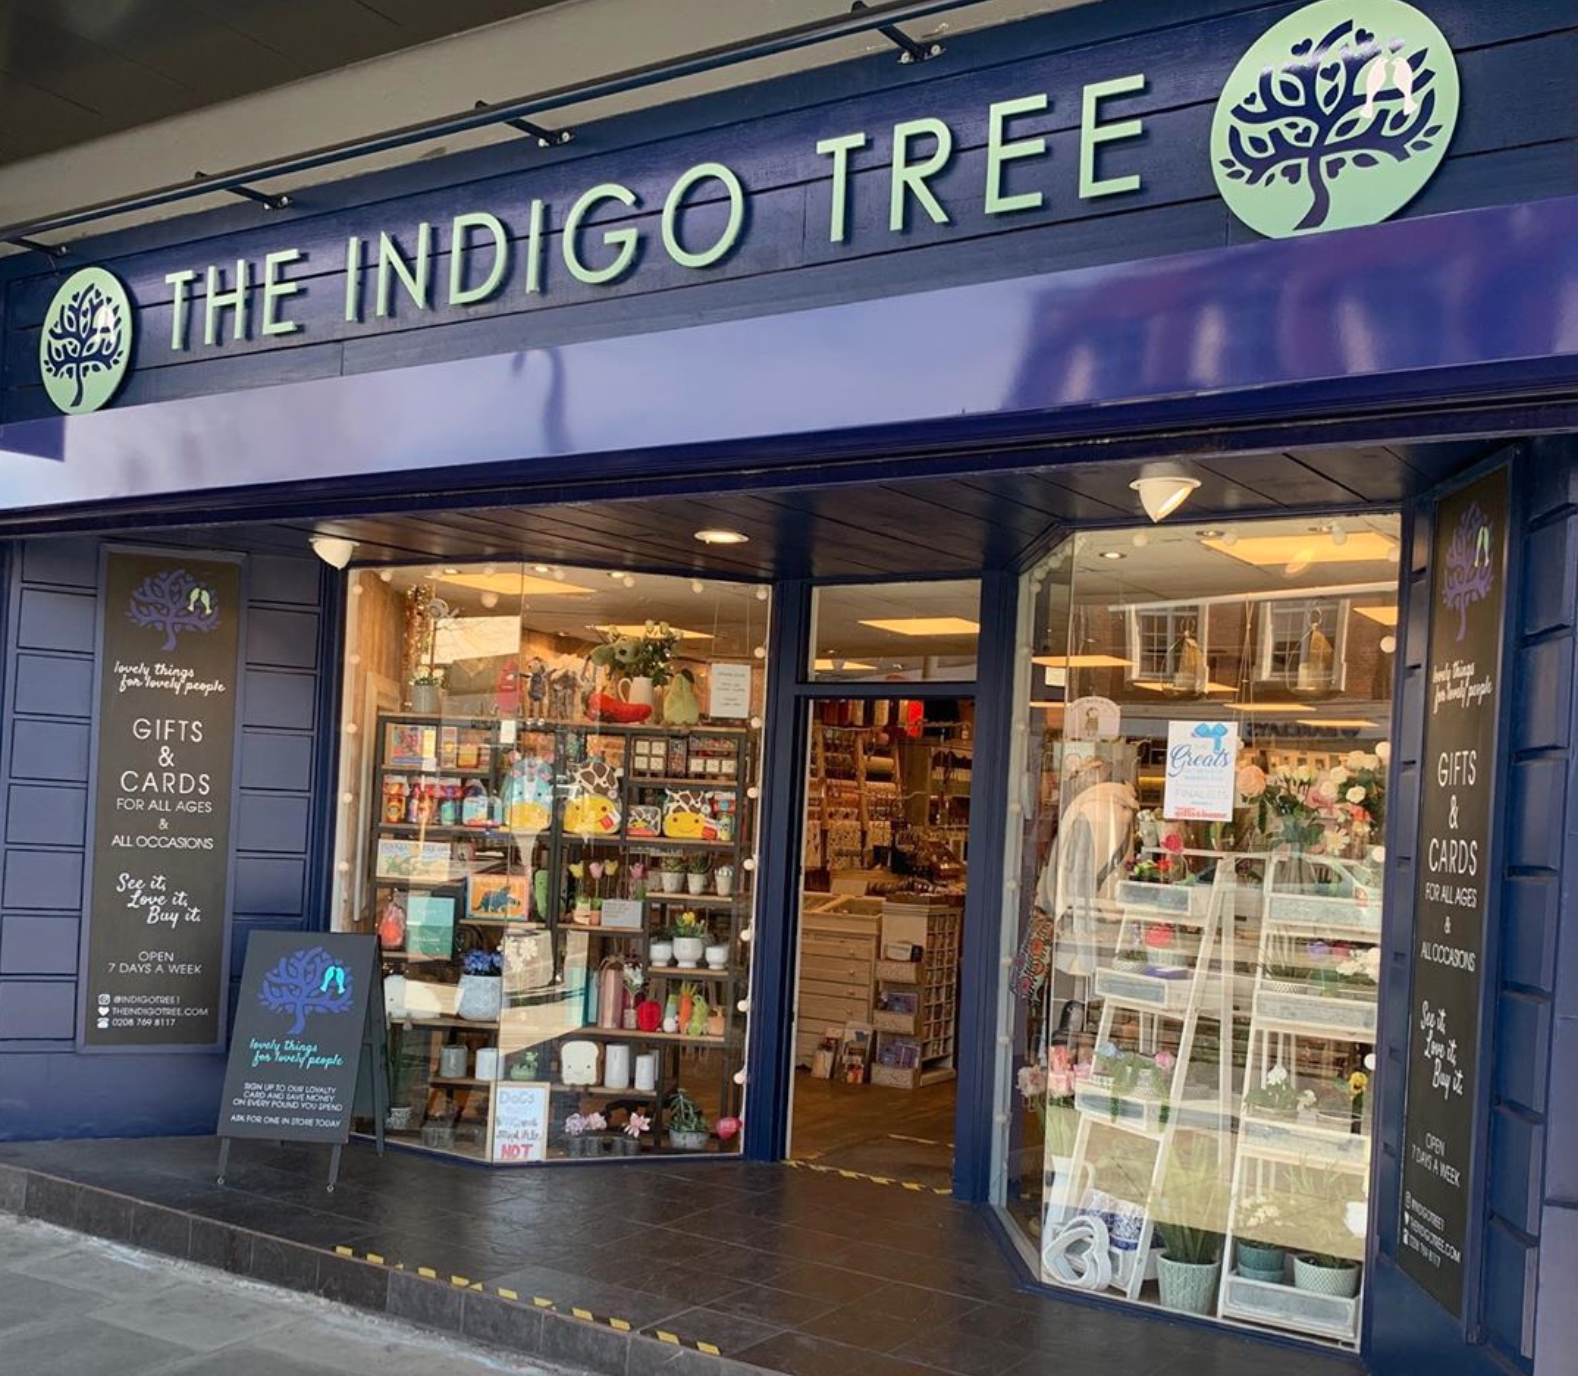 Above: The Indigo Tree’s shop in Streatham.